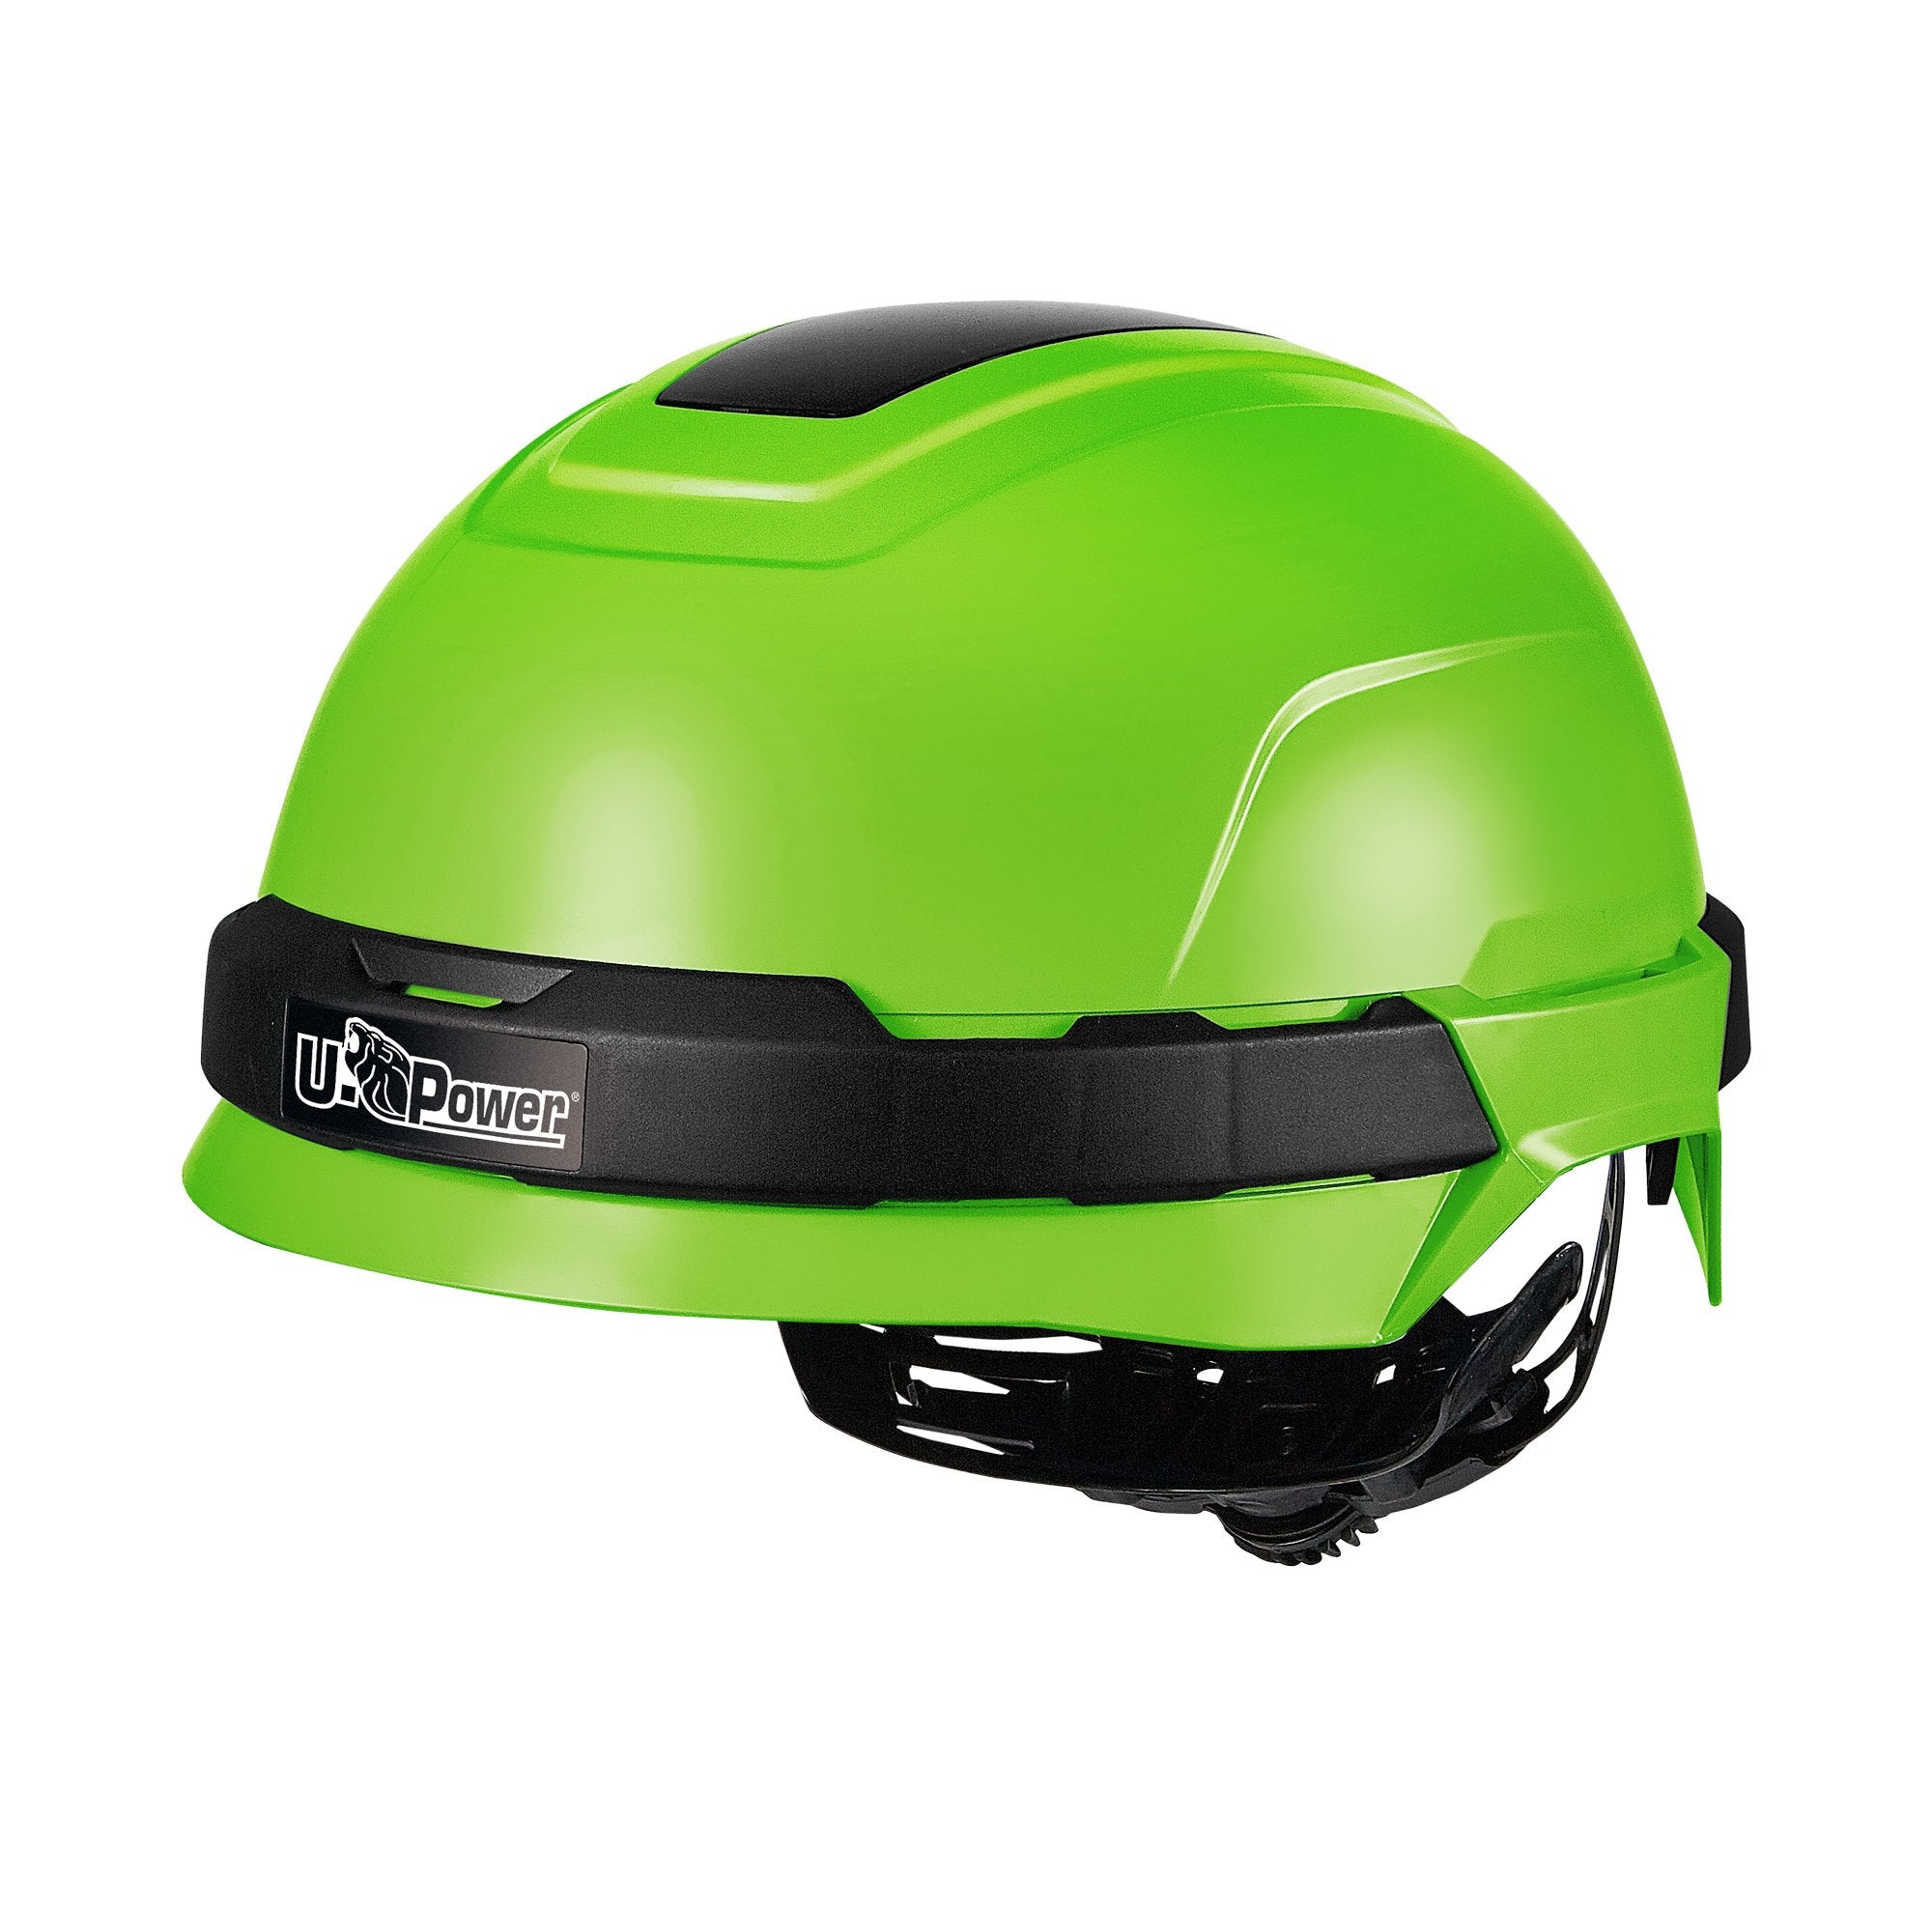 u-power-casco-protettivo-antares-verde-fluo-regolabile